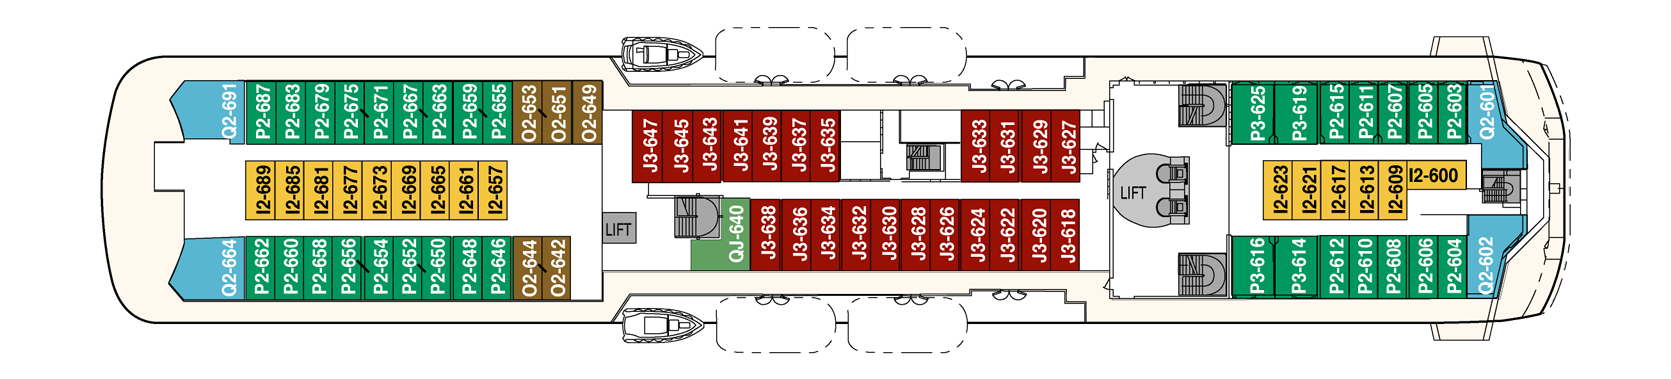 1548636366.6842_d267_Hurtigruten MS Midnatsol Deck Plans Deck 6.png